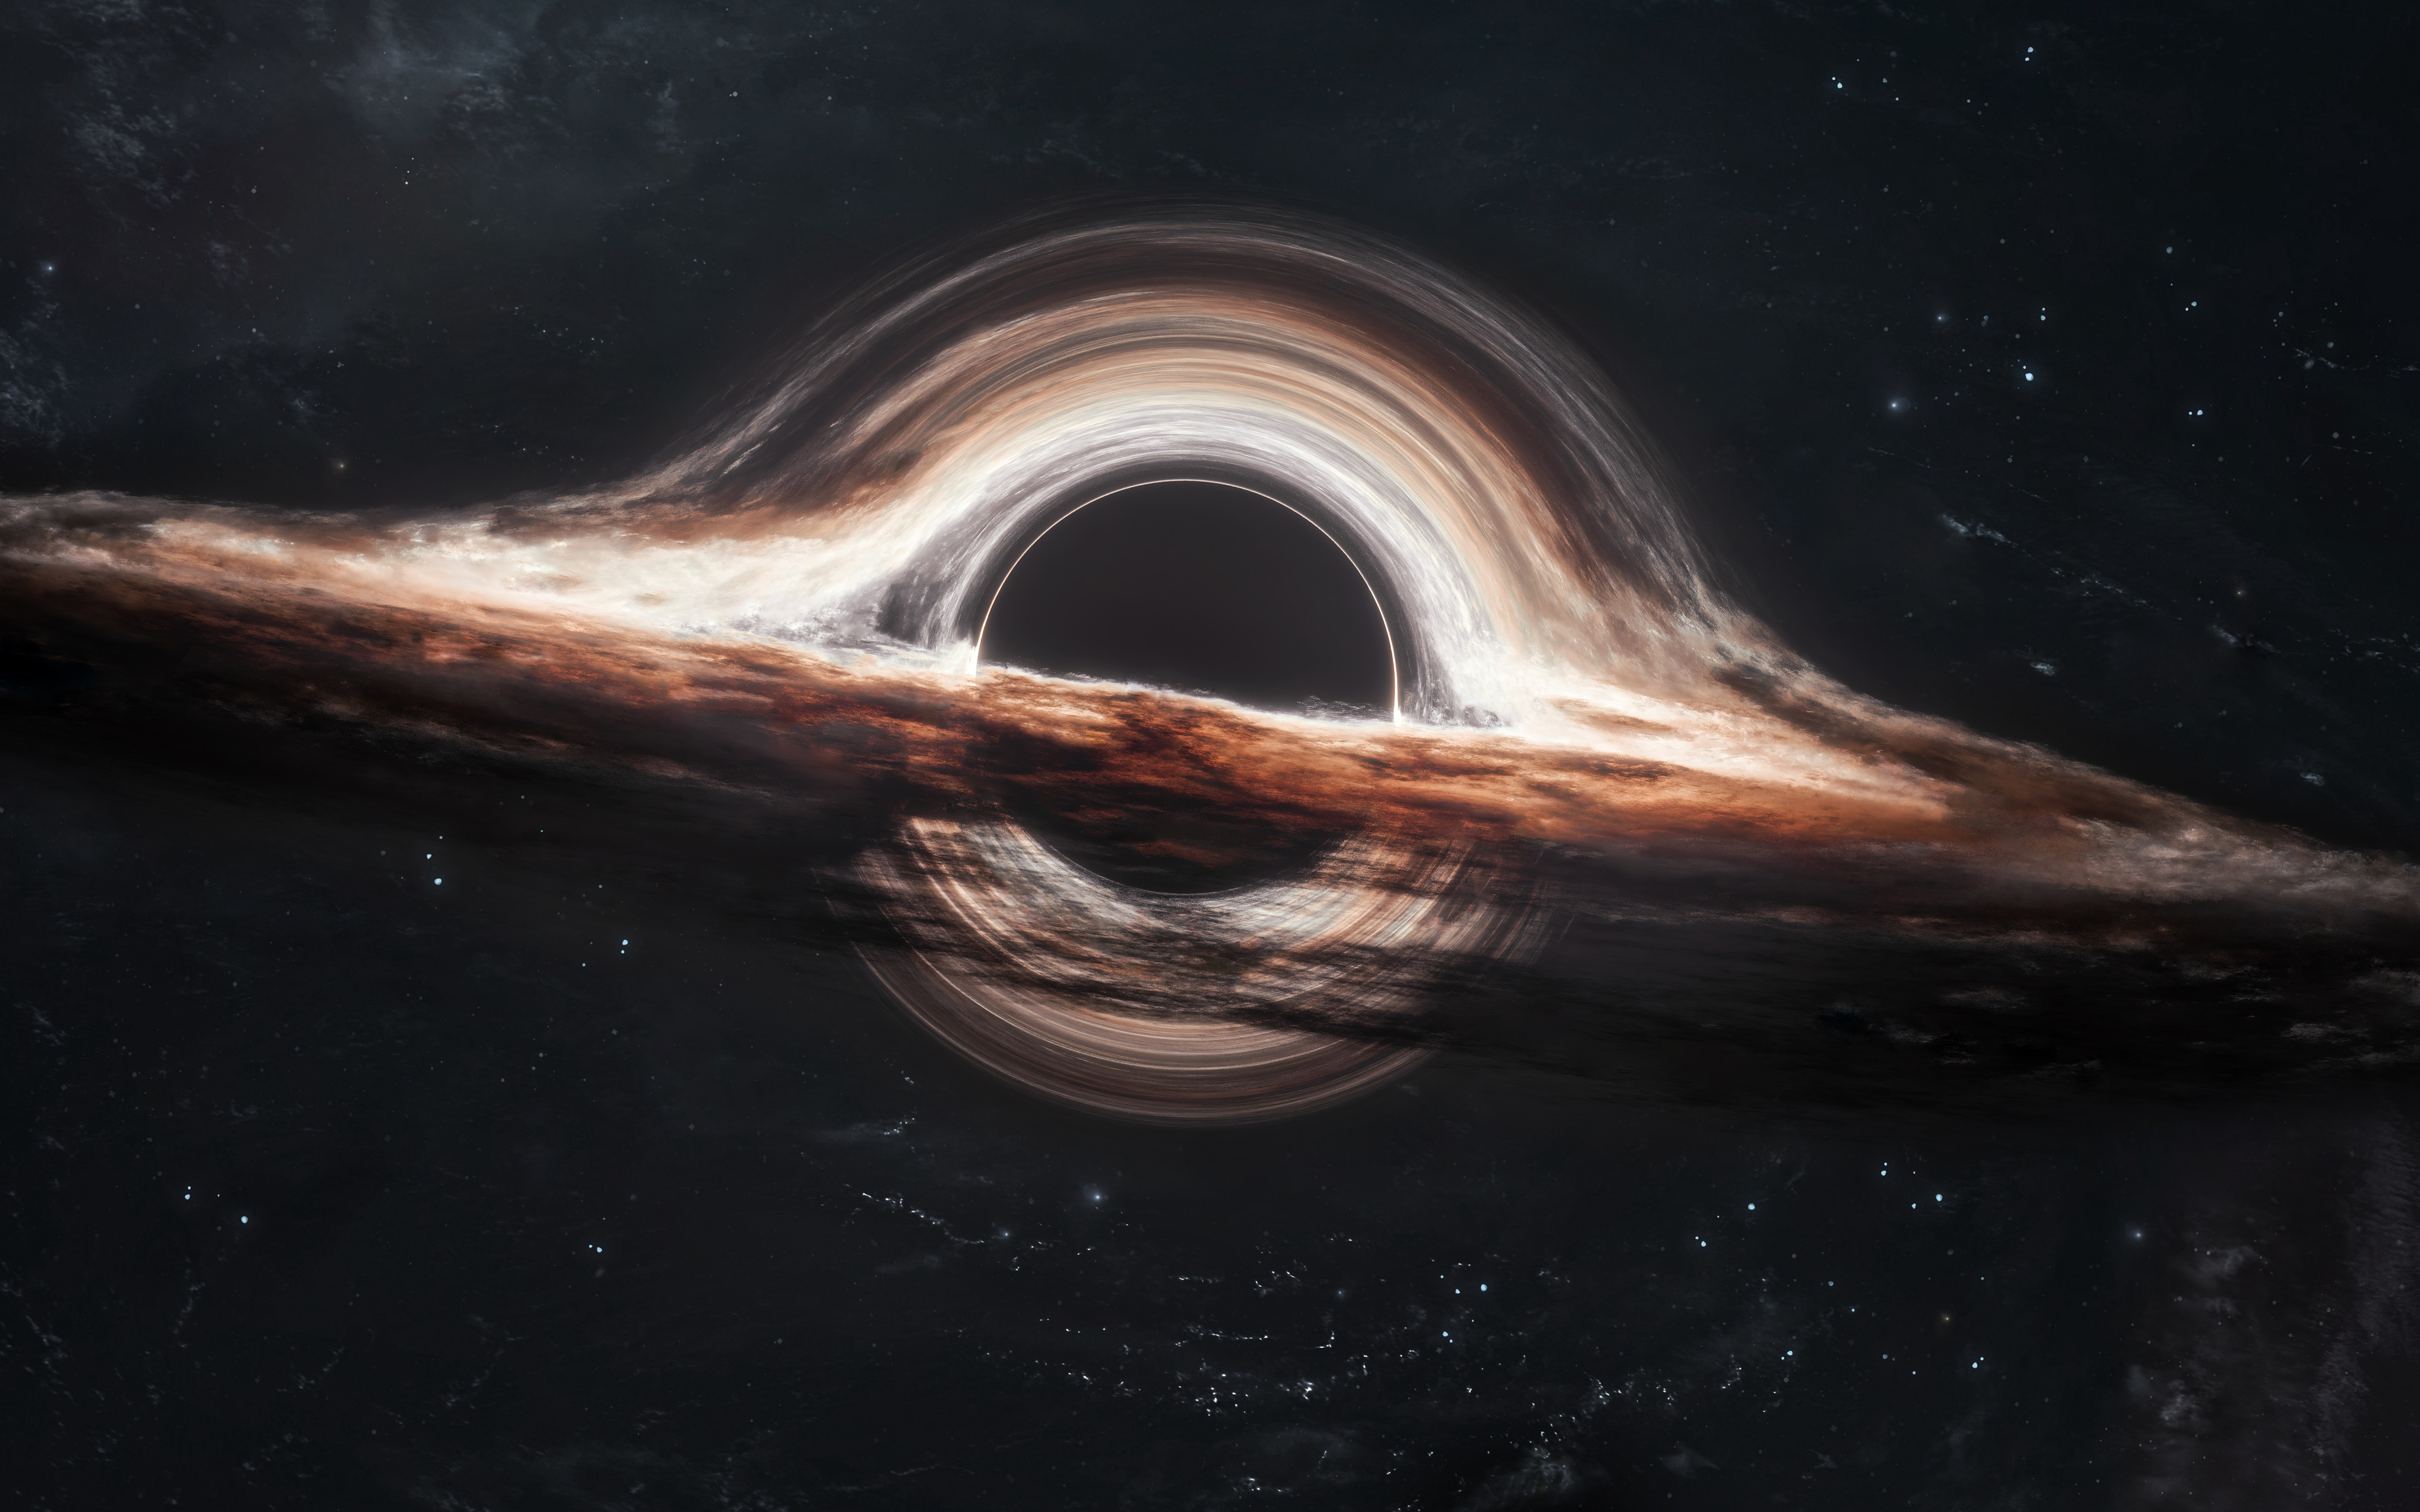 Digital Art Artwork Illustration Space Space Art Black Holes Science Fiction Galaxy 3840x2400